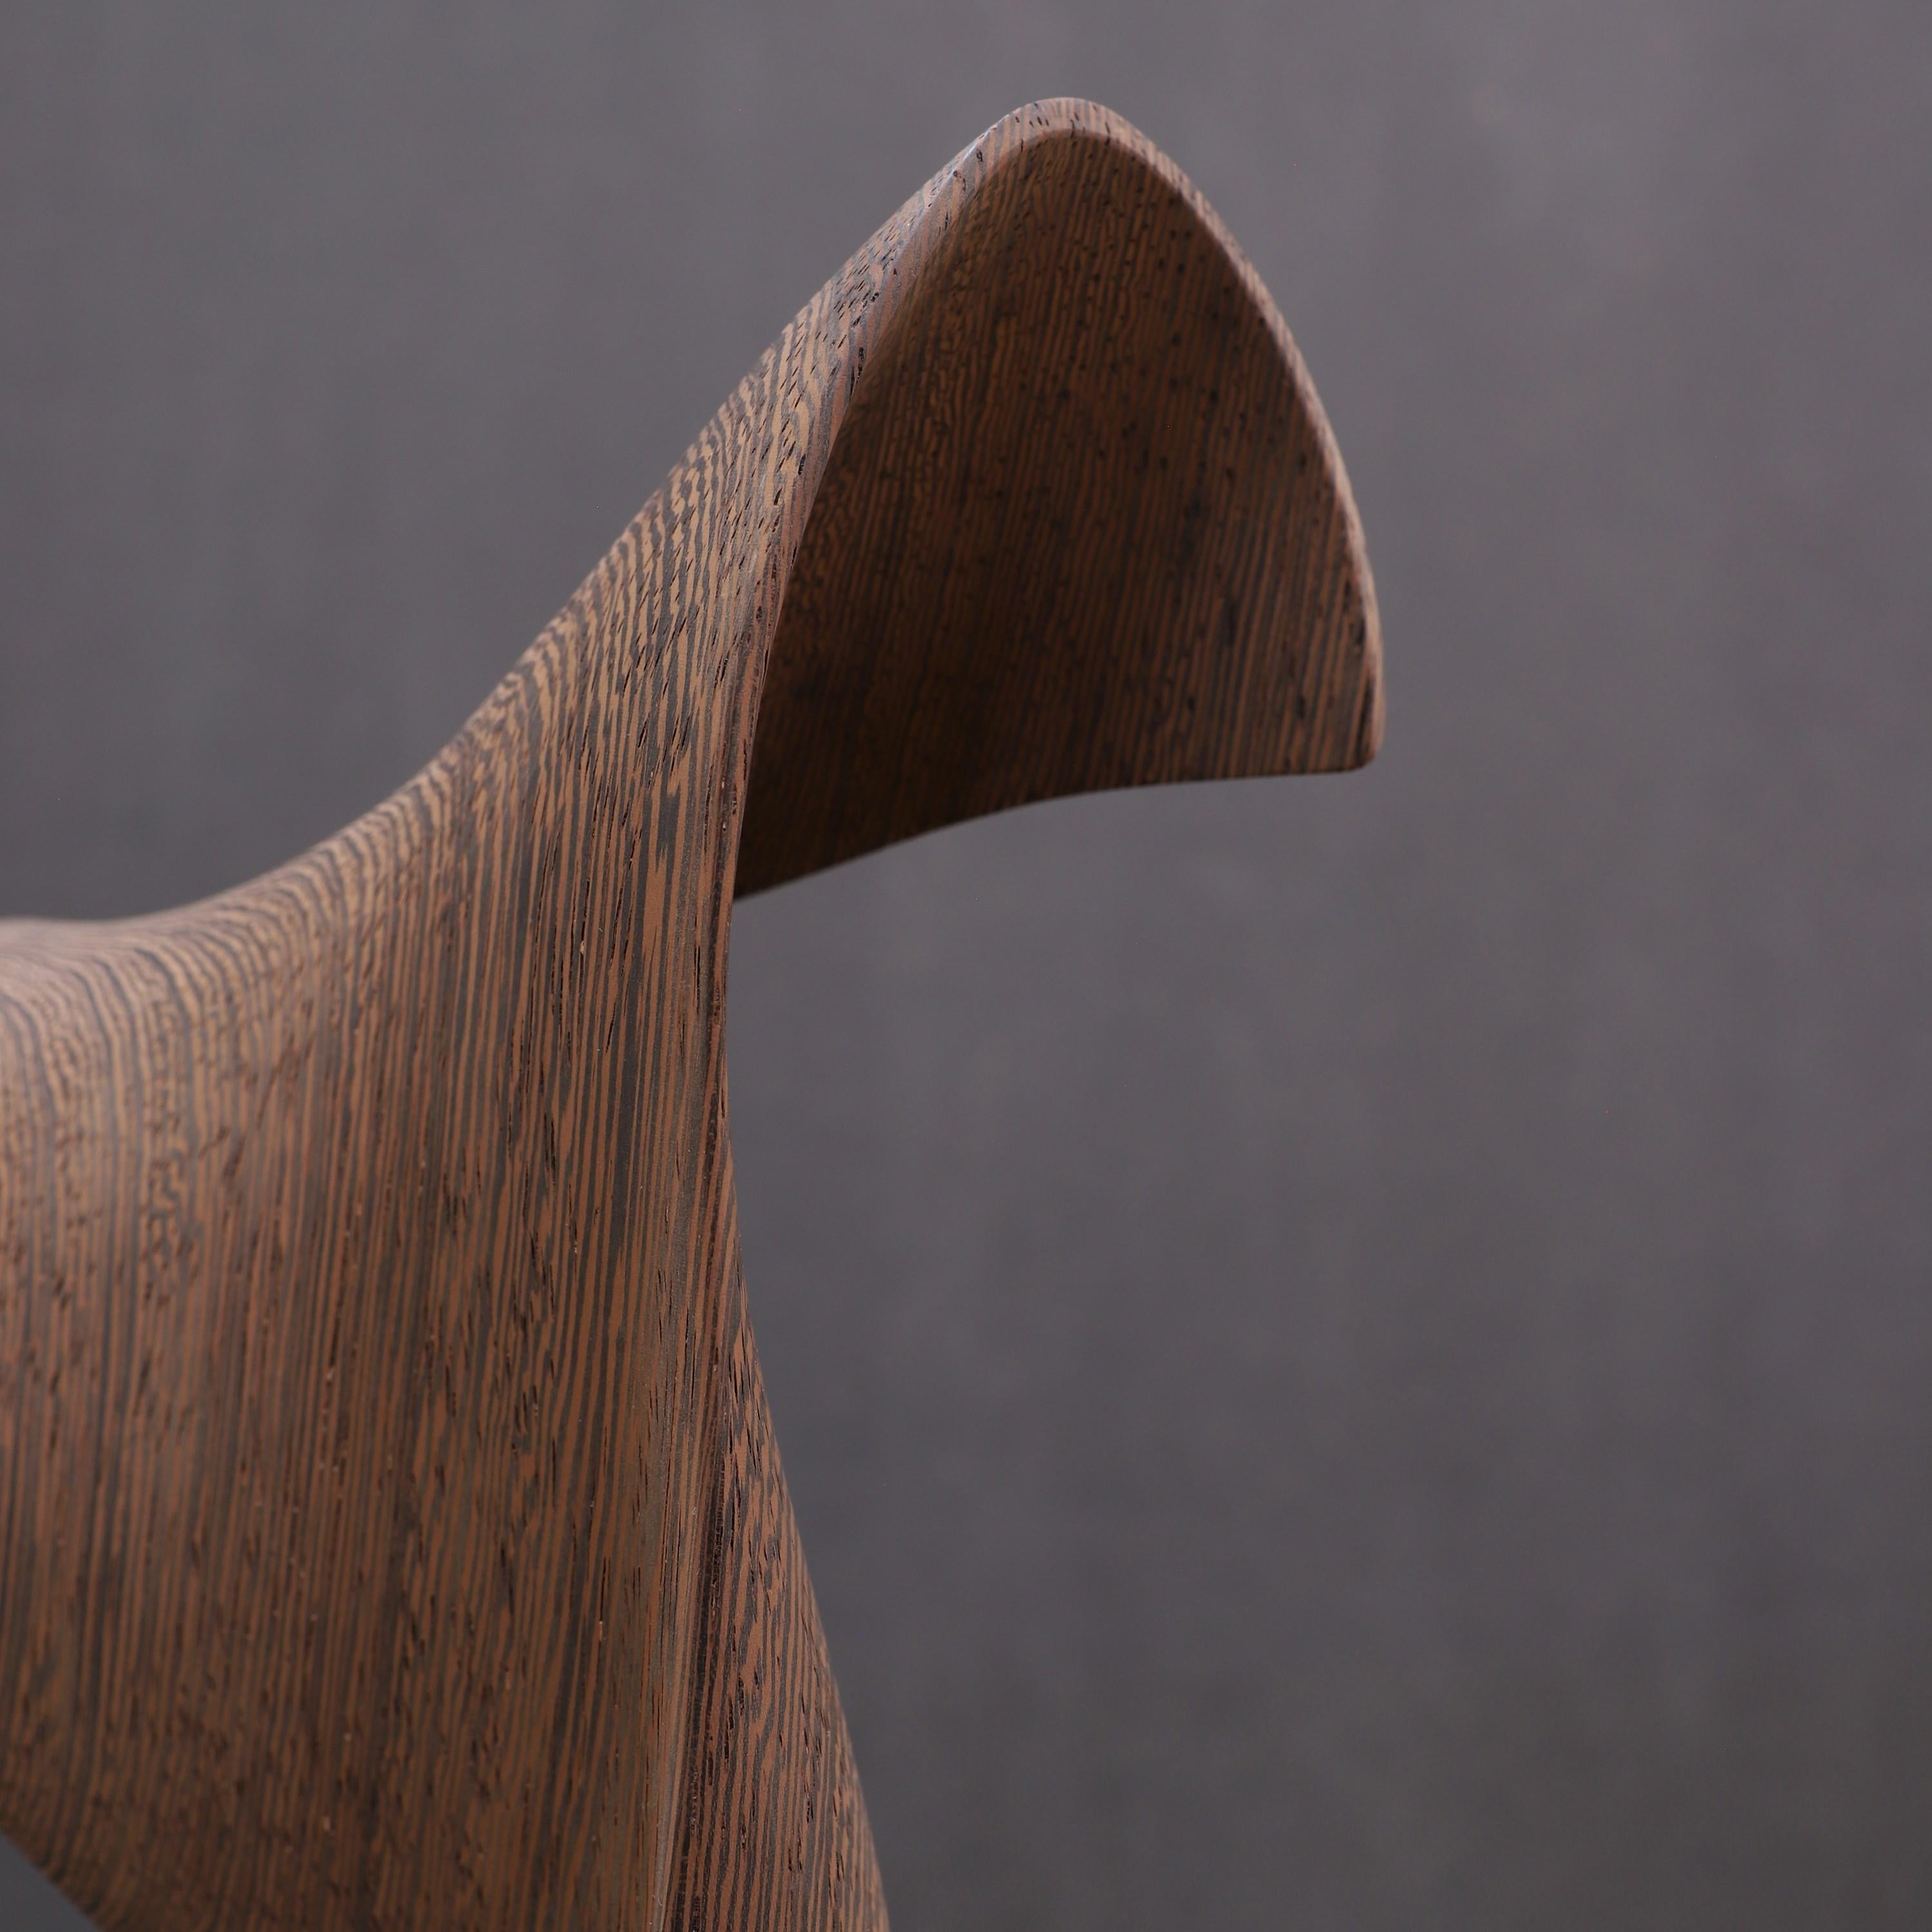 Flow Petit No 22, fluid abstract wooden sculpture by the Danish Studio Egeværk For Sale 5